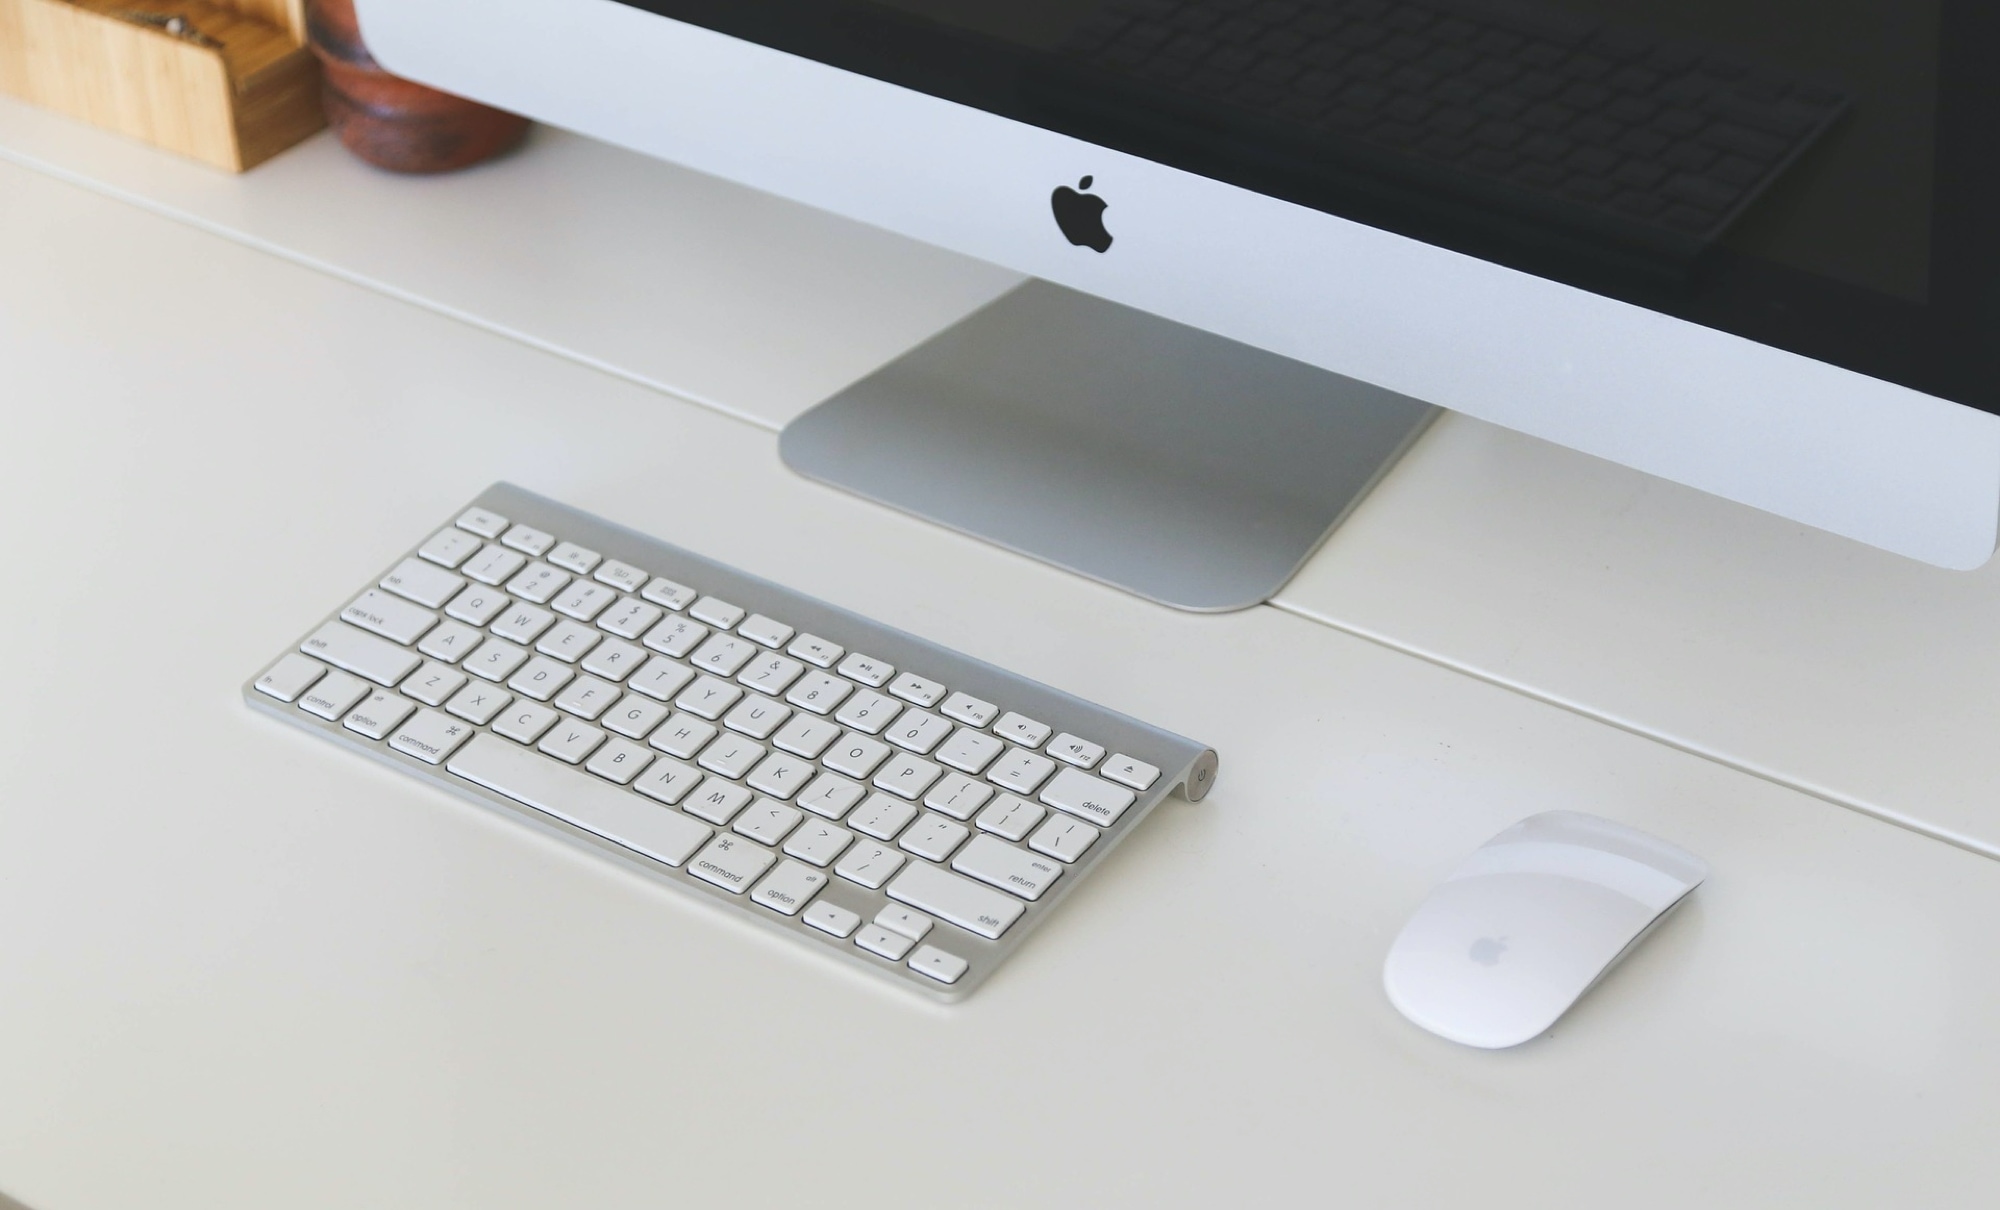 iMac keyboard - Terminal keyboard shortcuts